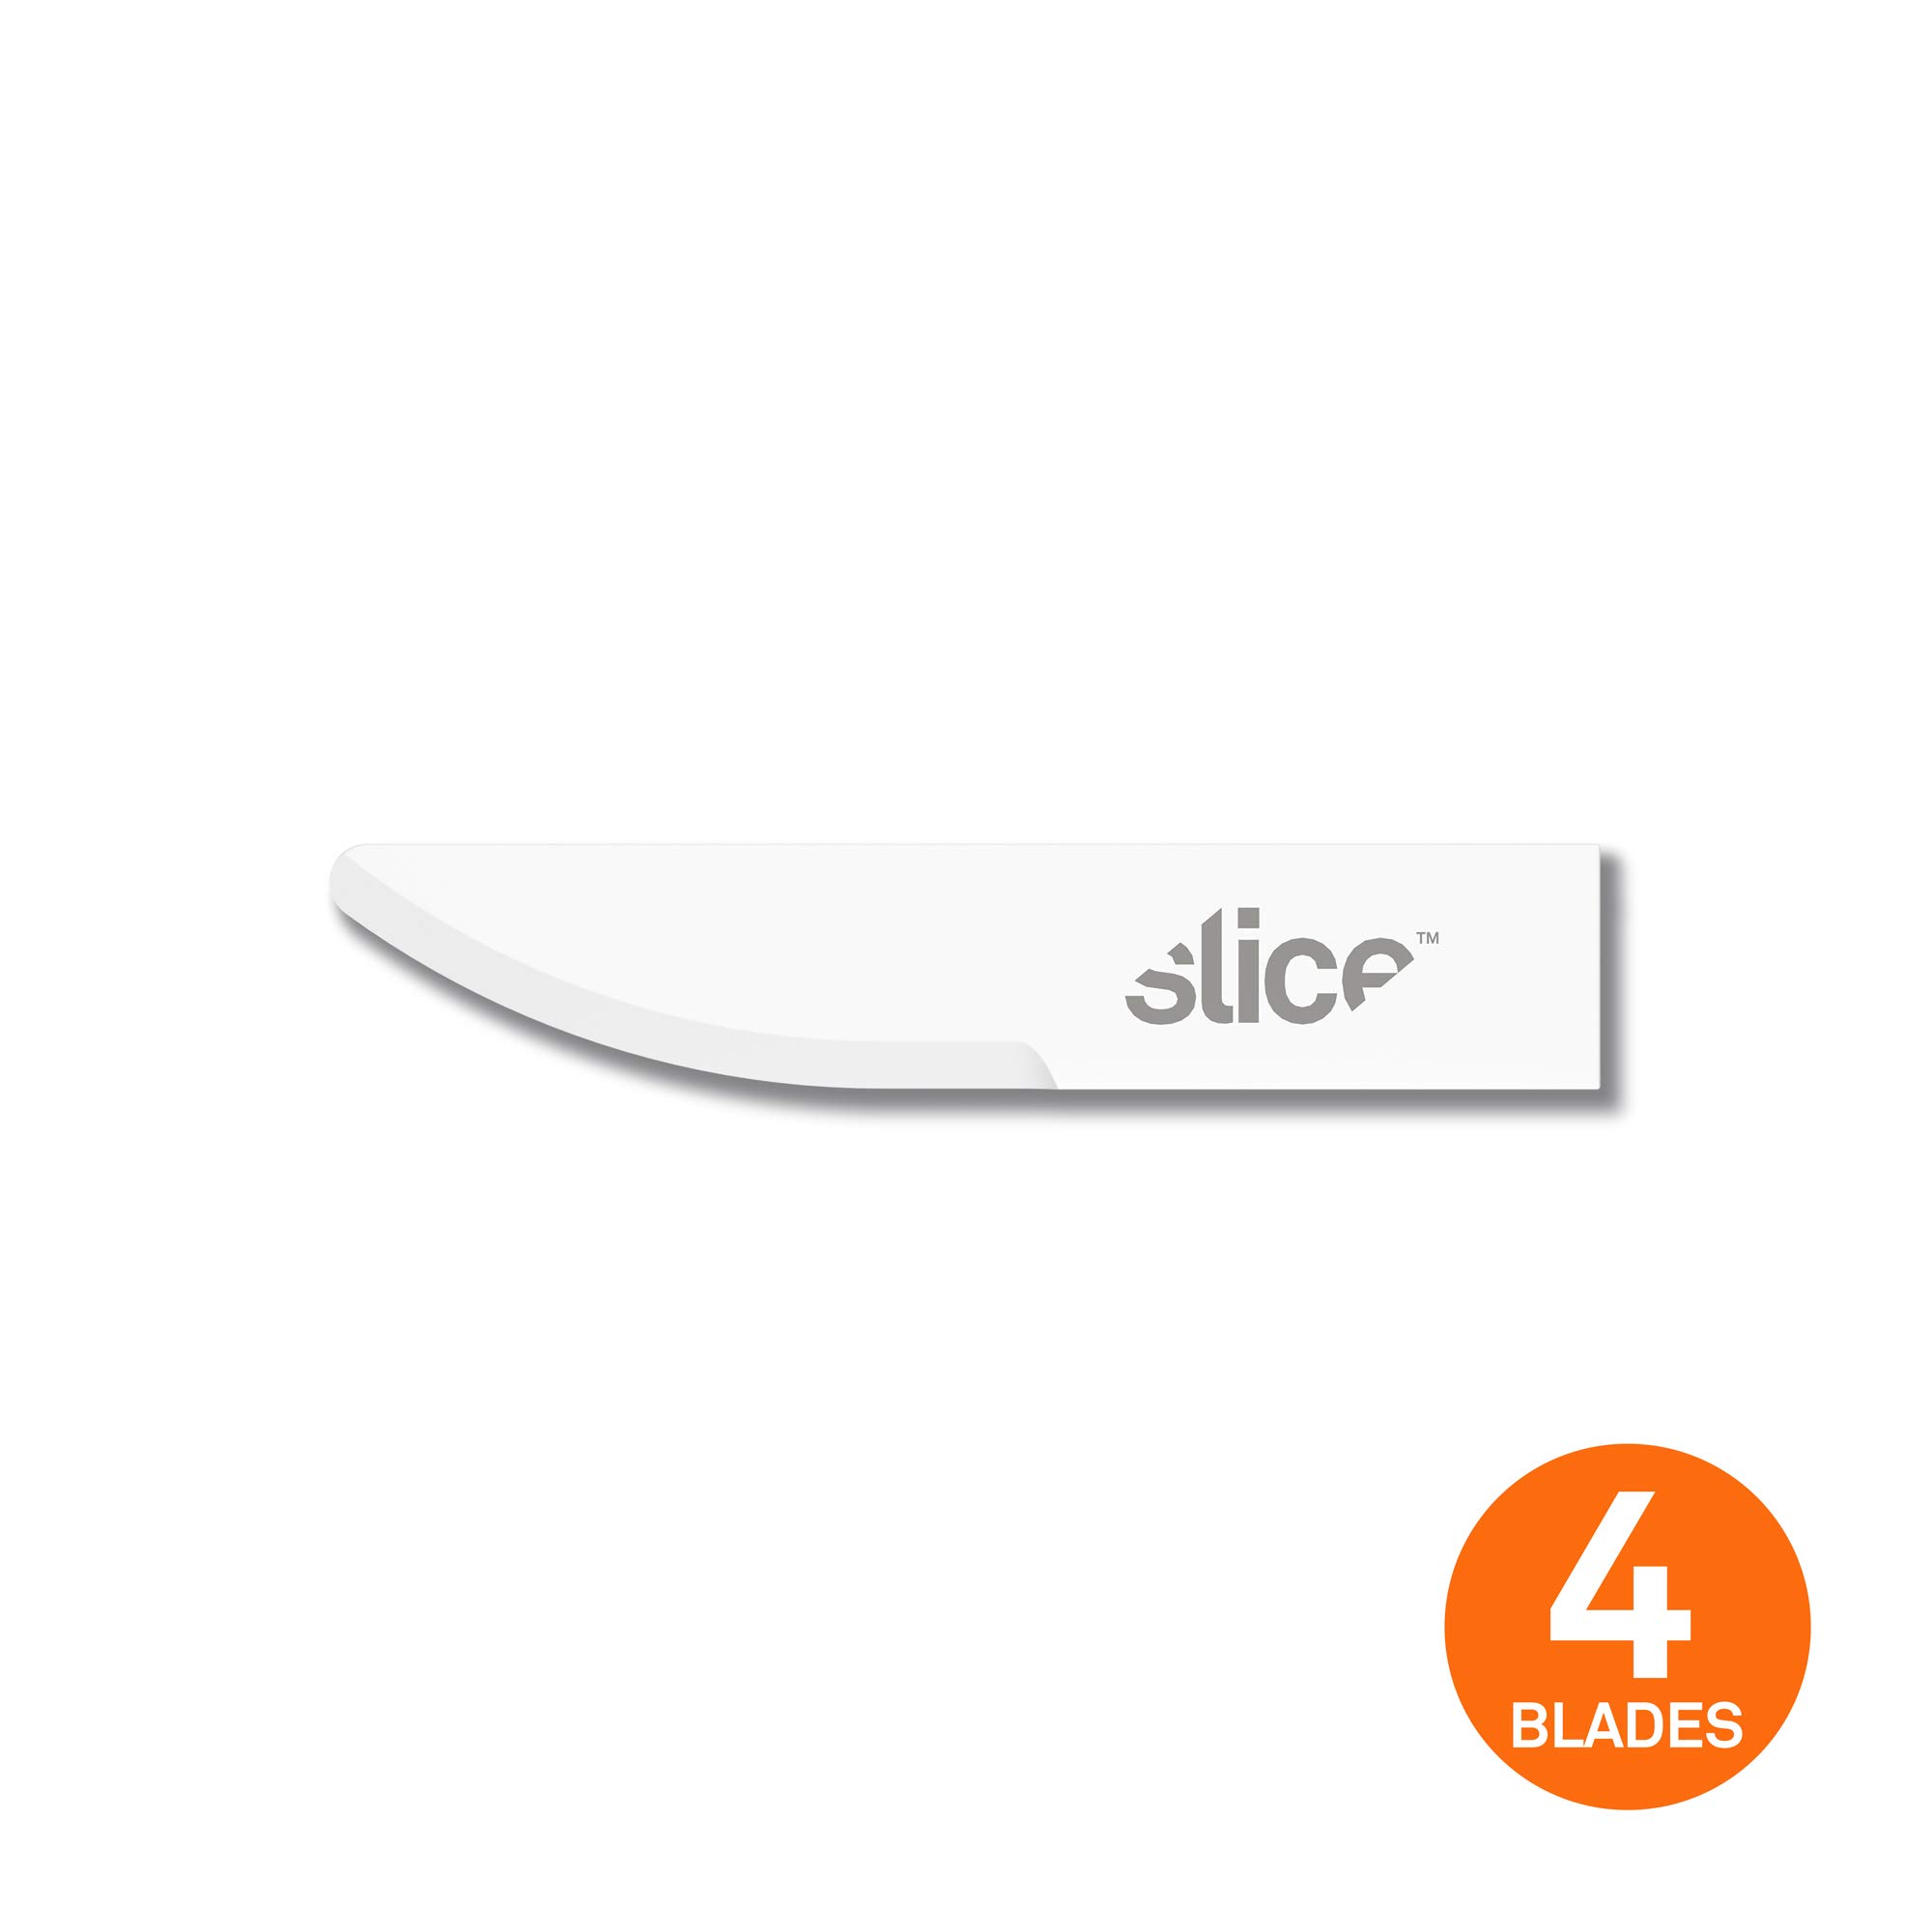 Slice 10520-CS Craft Blades, Fits Most Craft Handle Knives, Ceramic Blade, 24 Blades, White